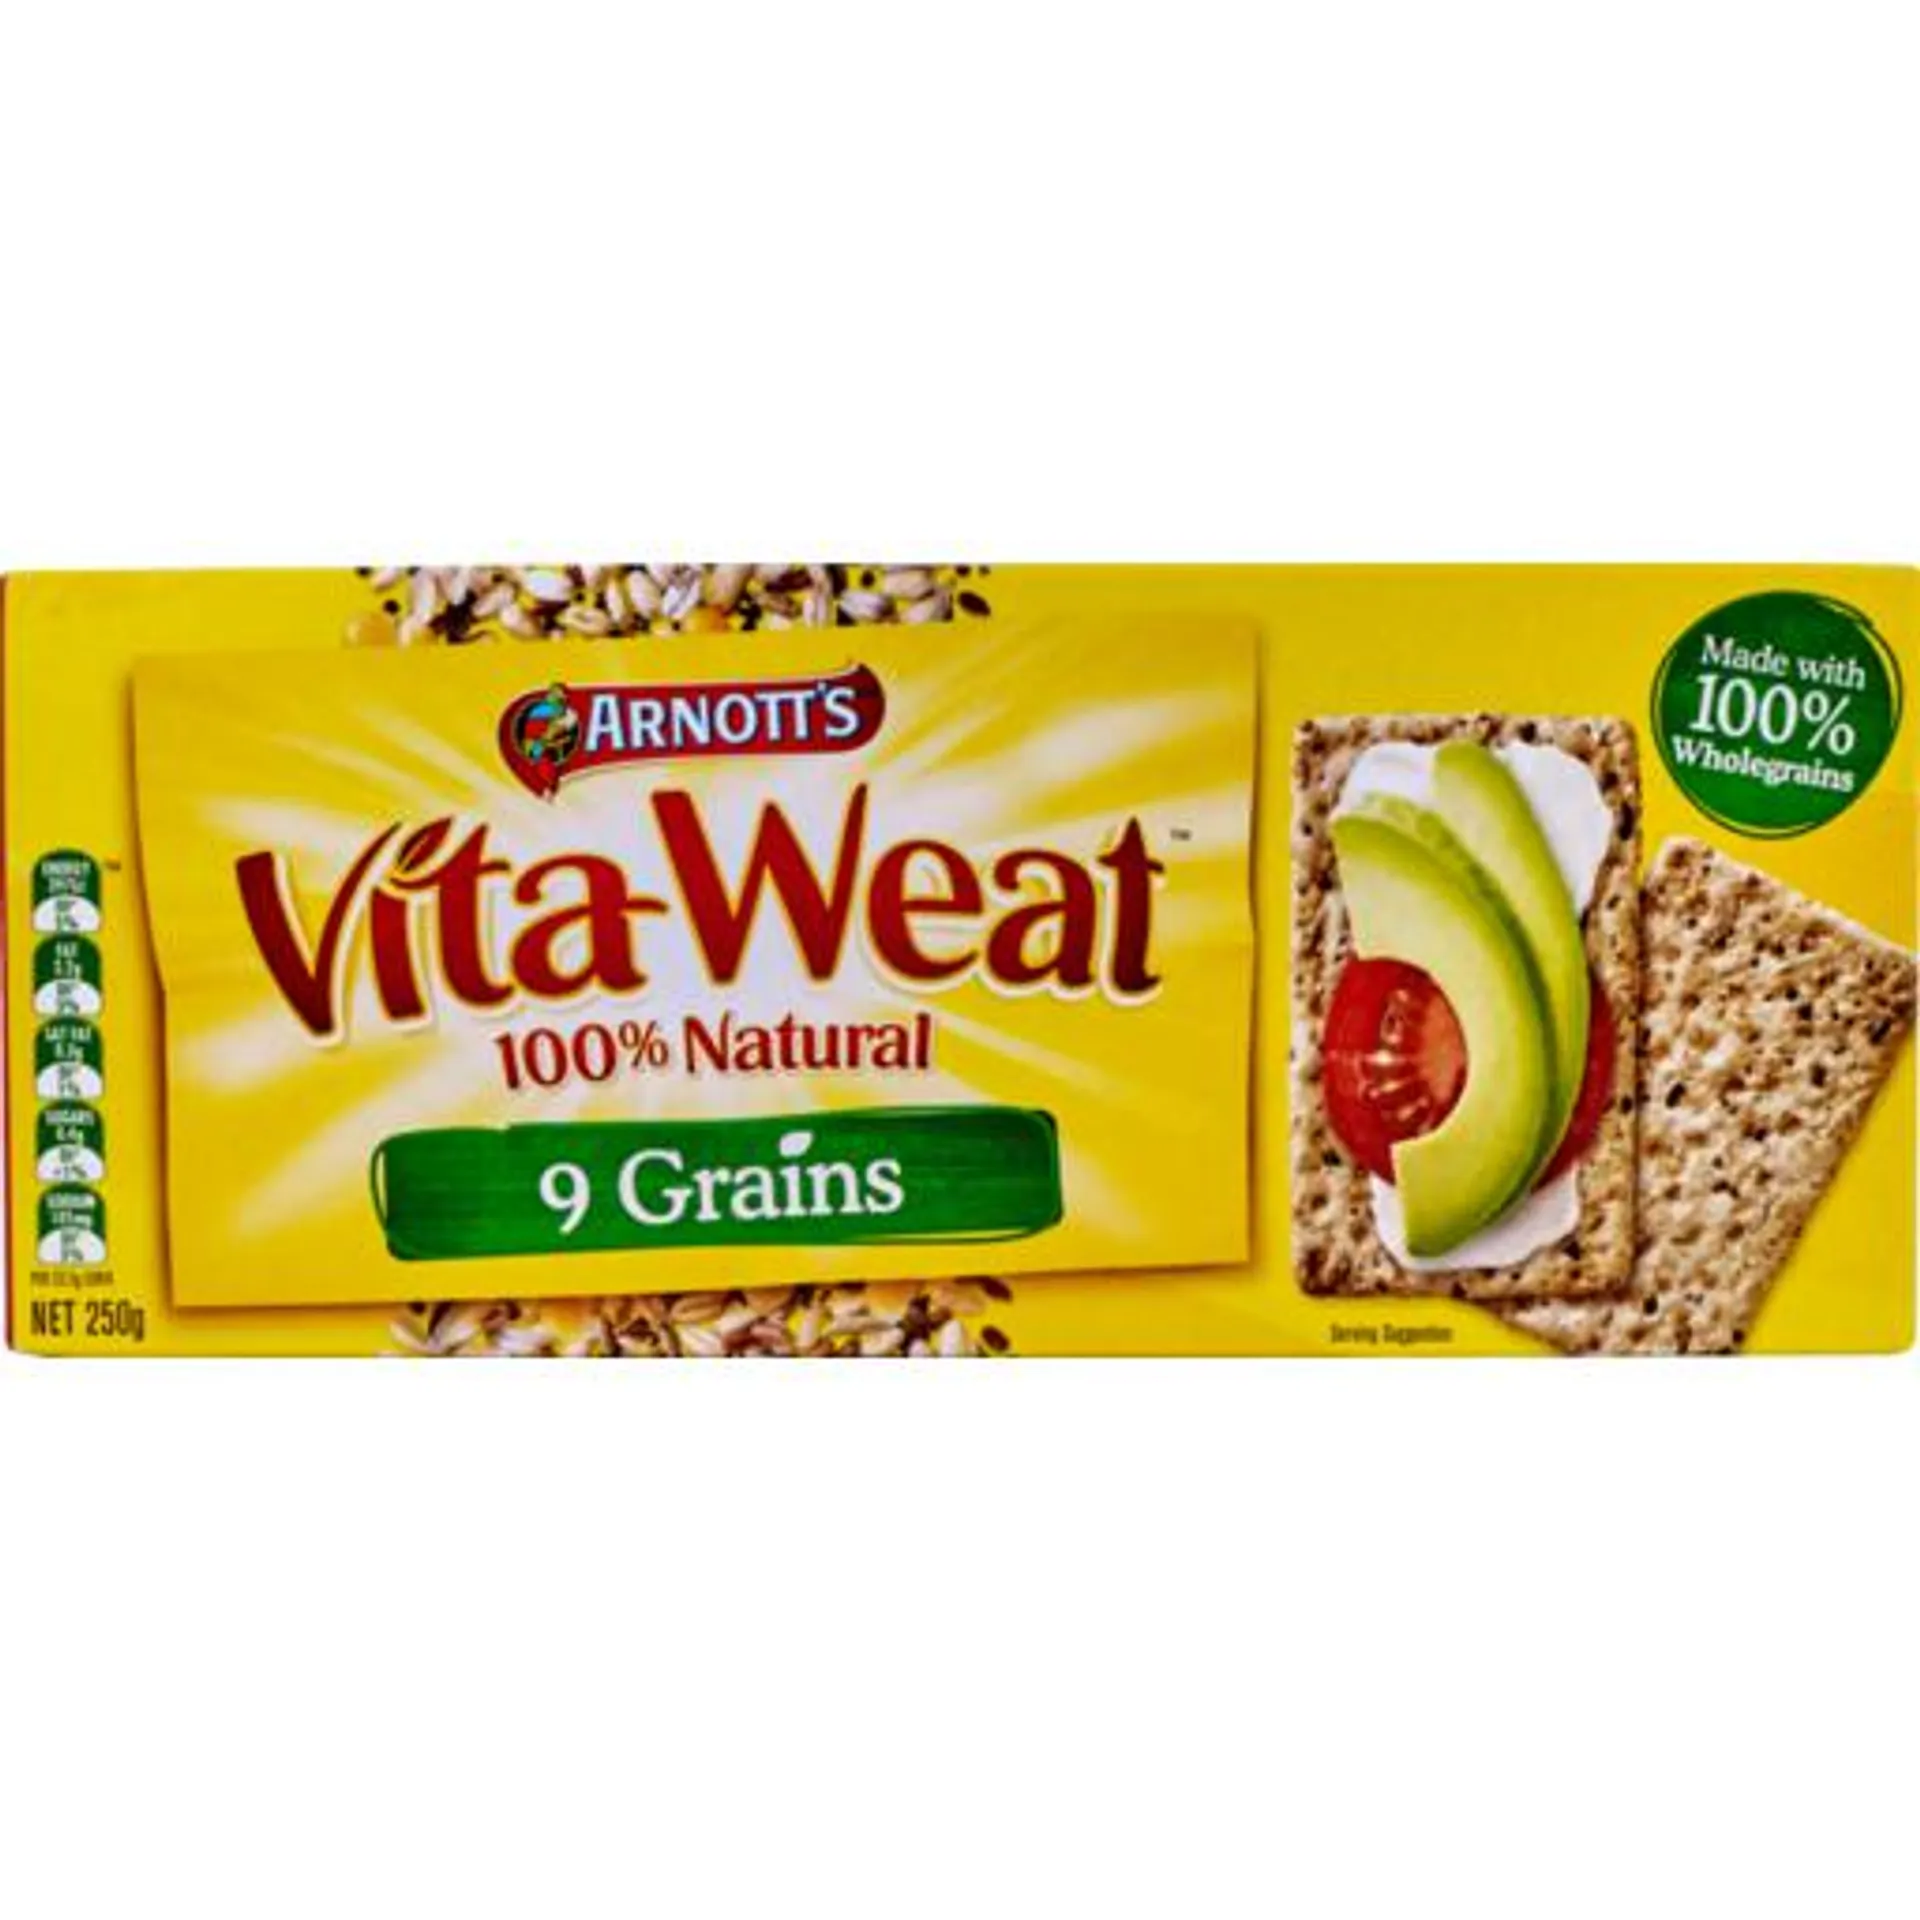 Arnotts Vita-Weat 9 Grains 250g